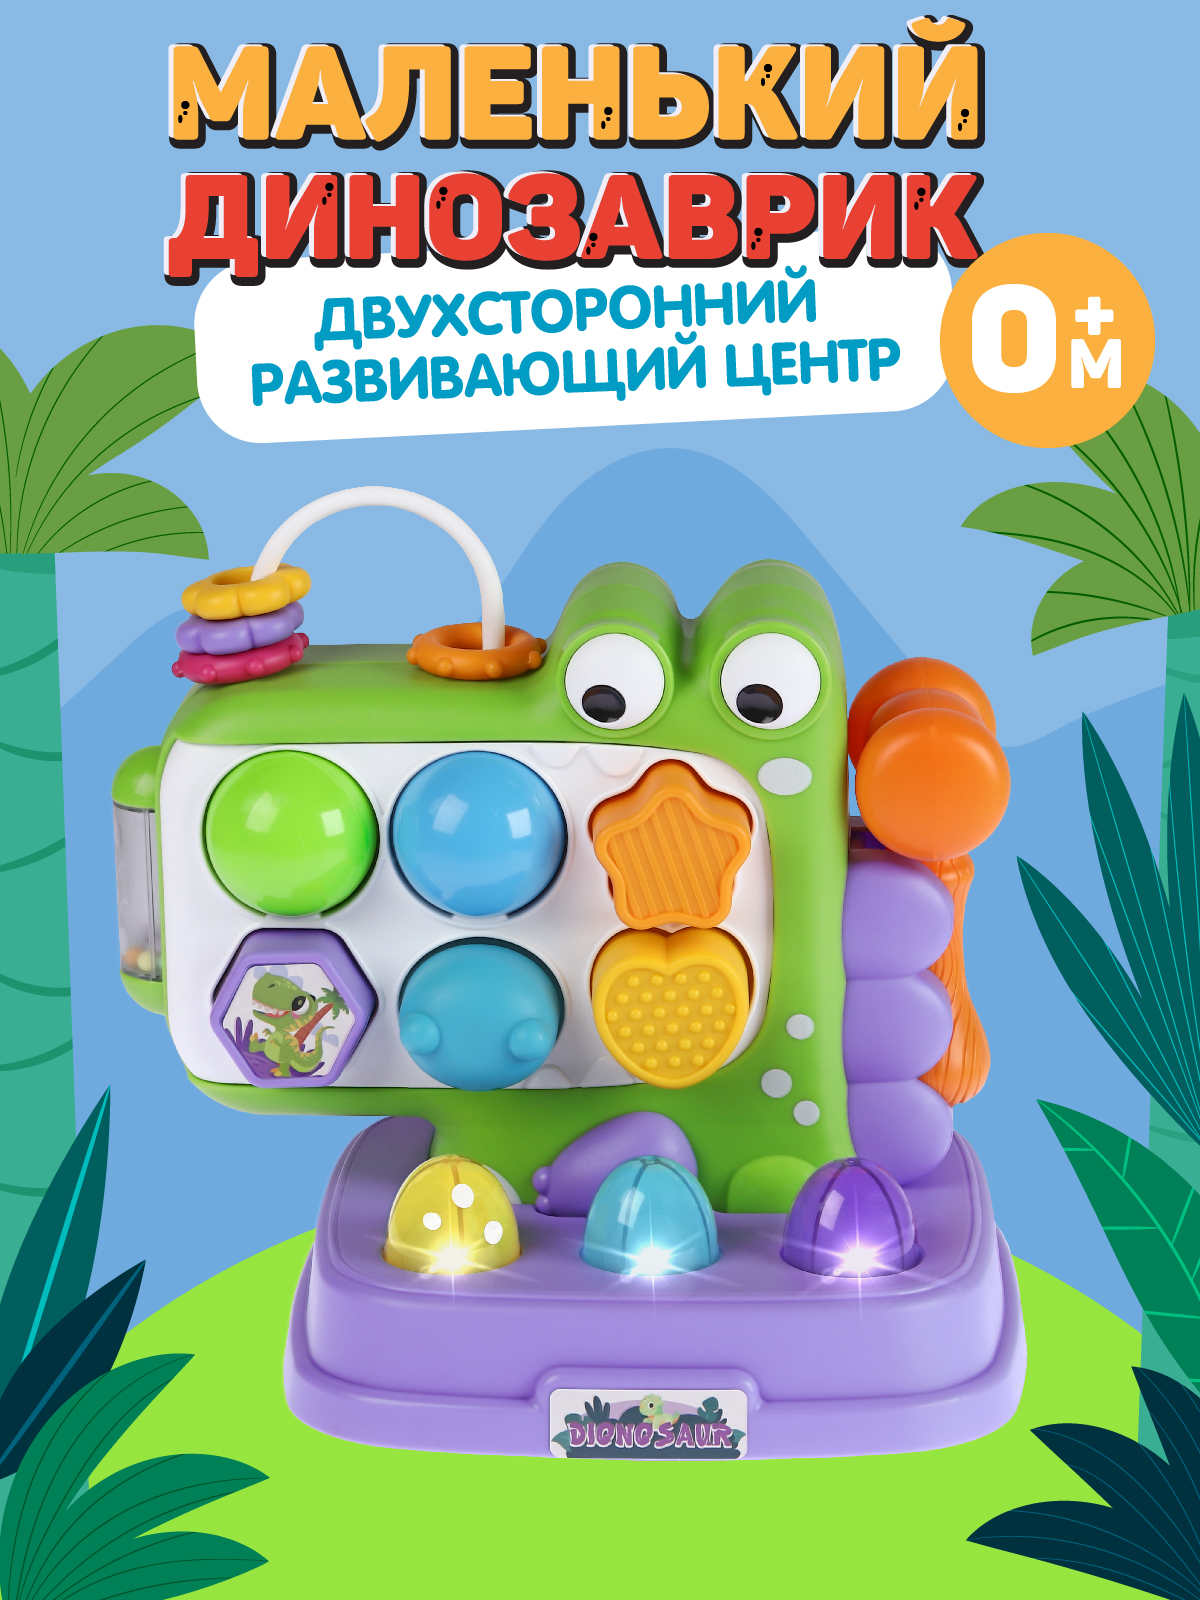 Развивающая игрушка Smart Baby Динозаврик, элементы бизиборда, сортер, JB0334119